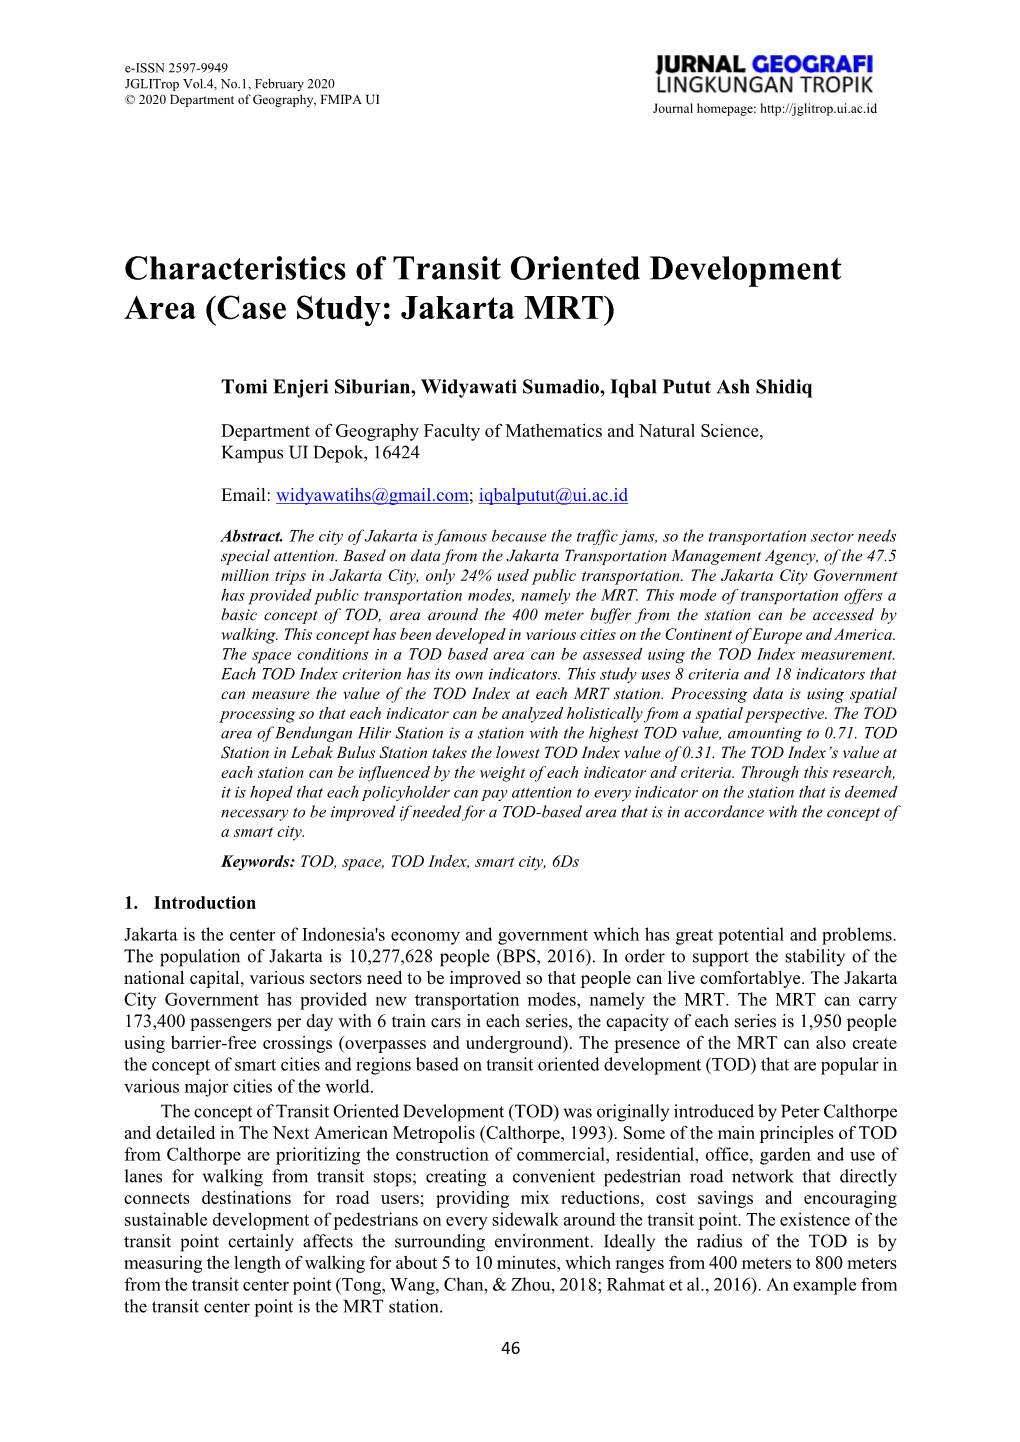 Characteristics of Transit Oriented Development Area (Case Study: Jakarta MRT)